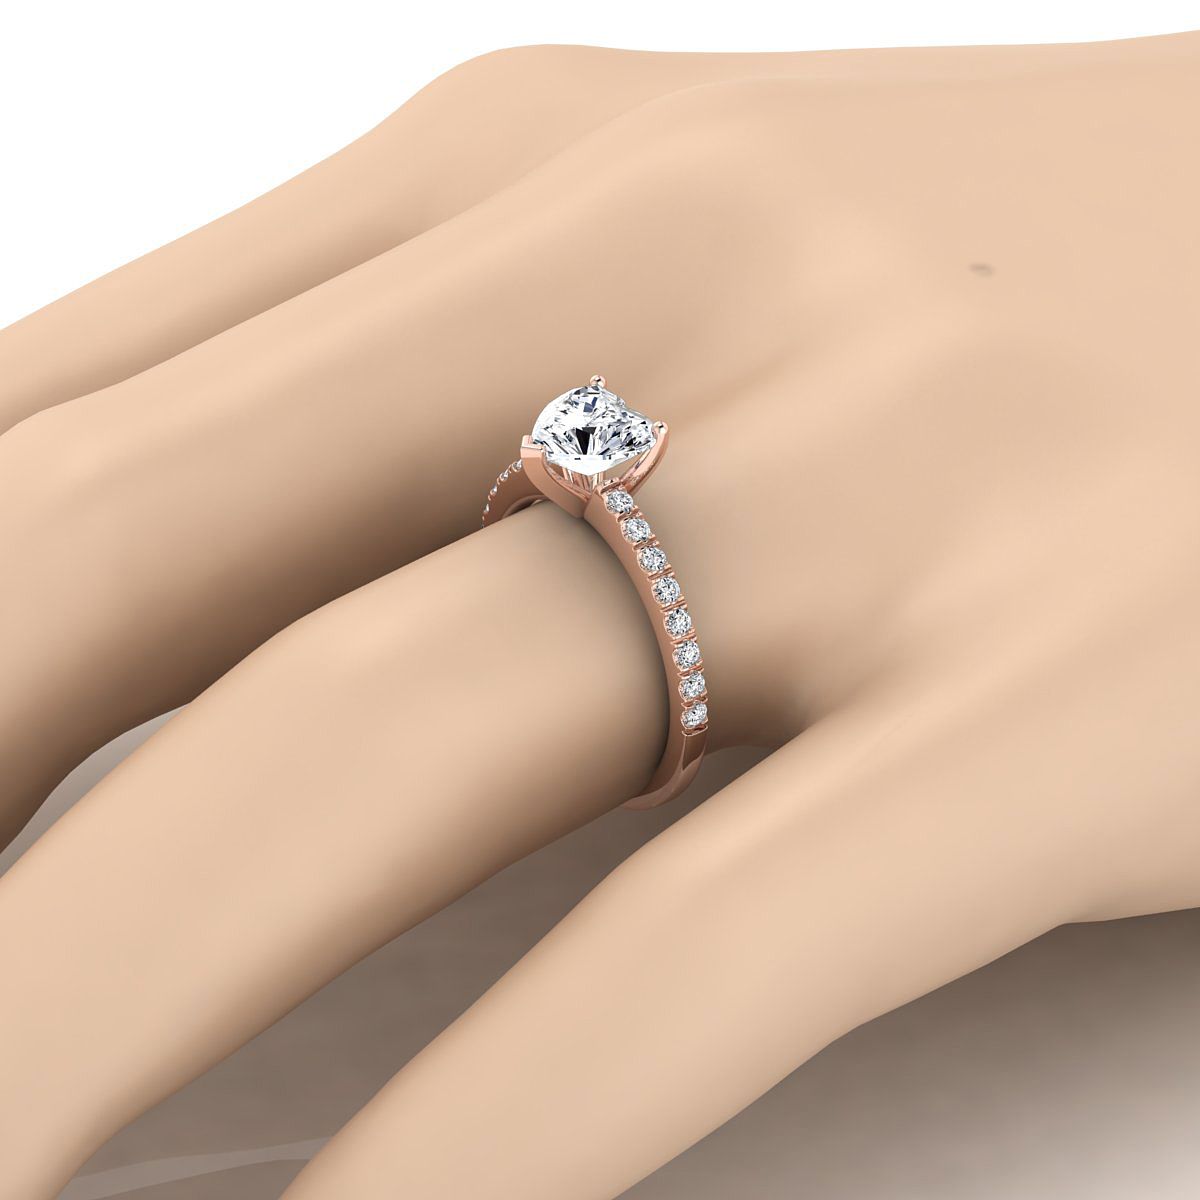 14K Rose Gold Heart Shape Center Simple Linear Diamond Pave Engagement Ring -1/5ctw